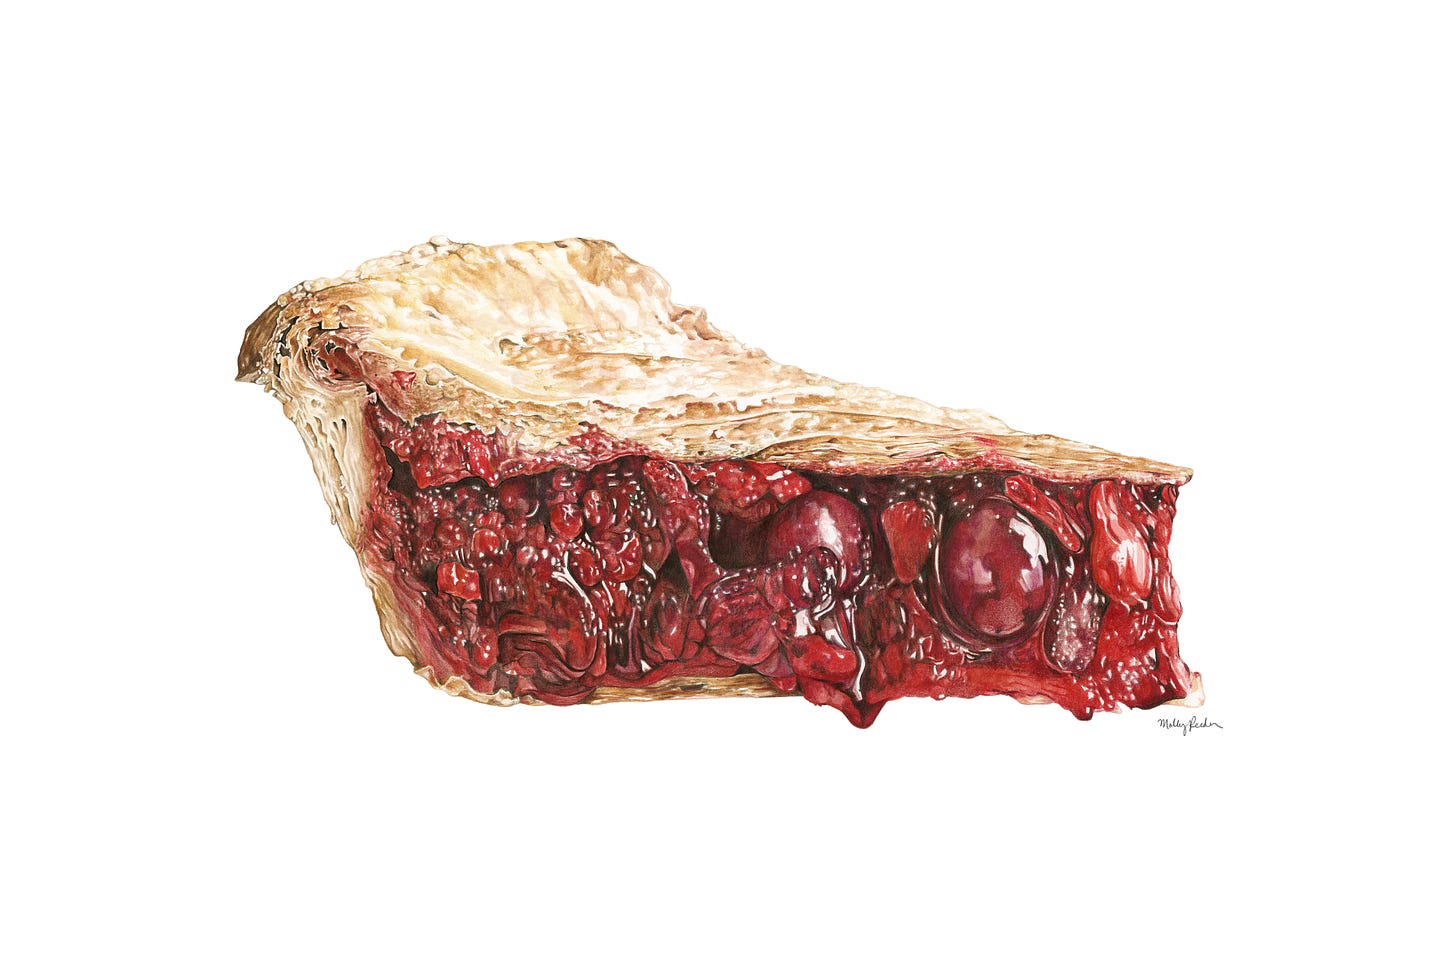 A slice of juicy cherry pie, painted in watercolor